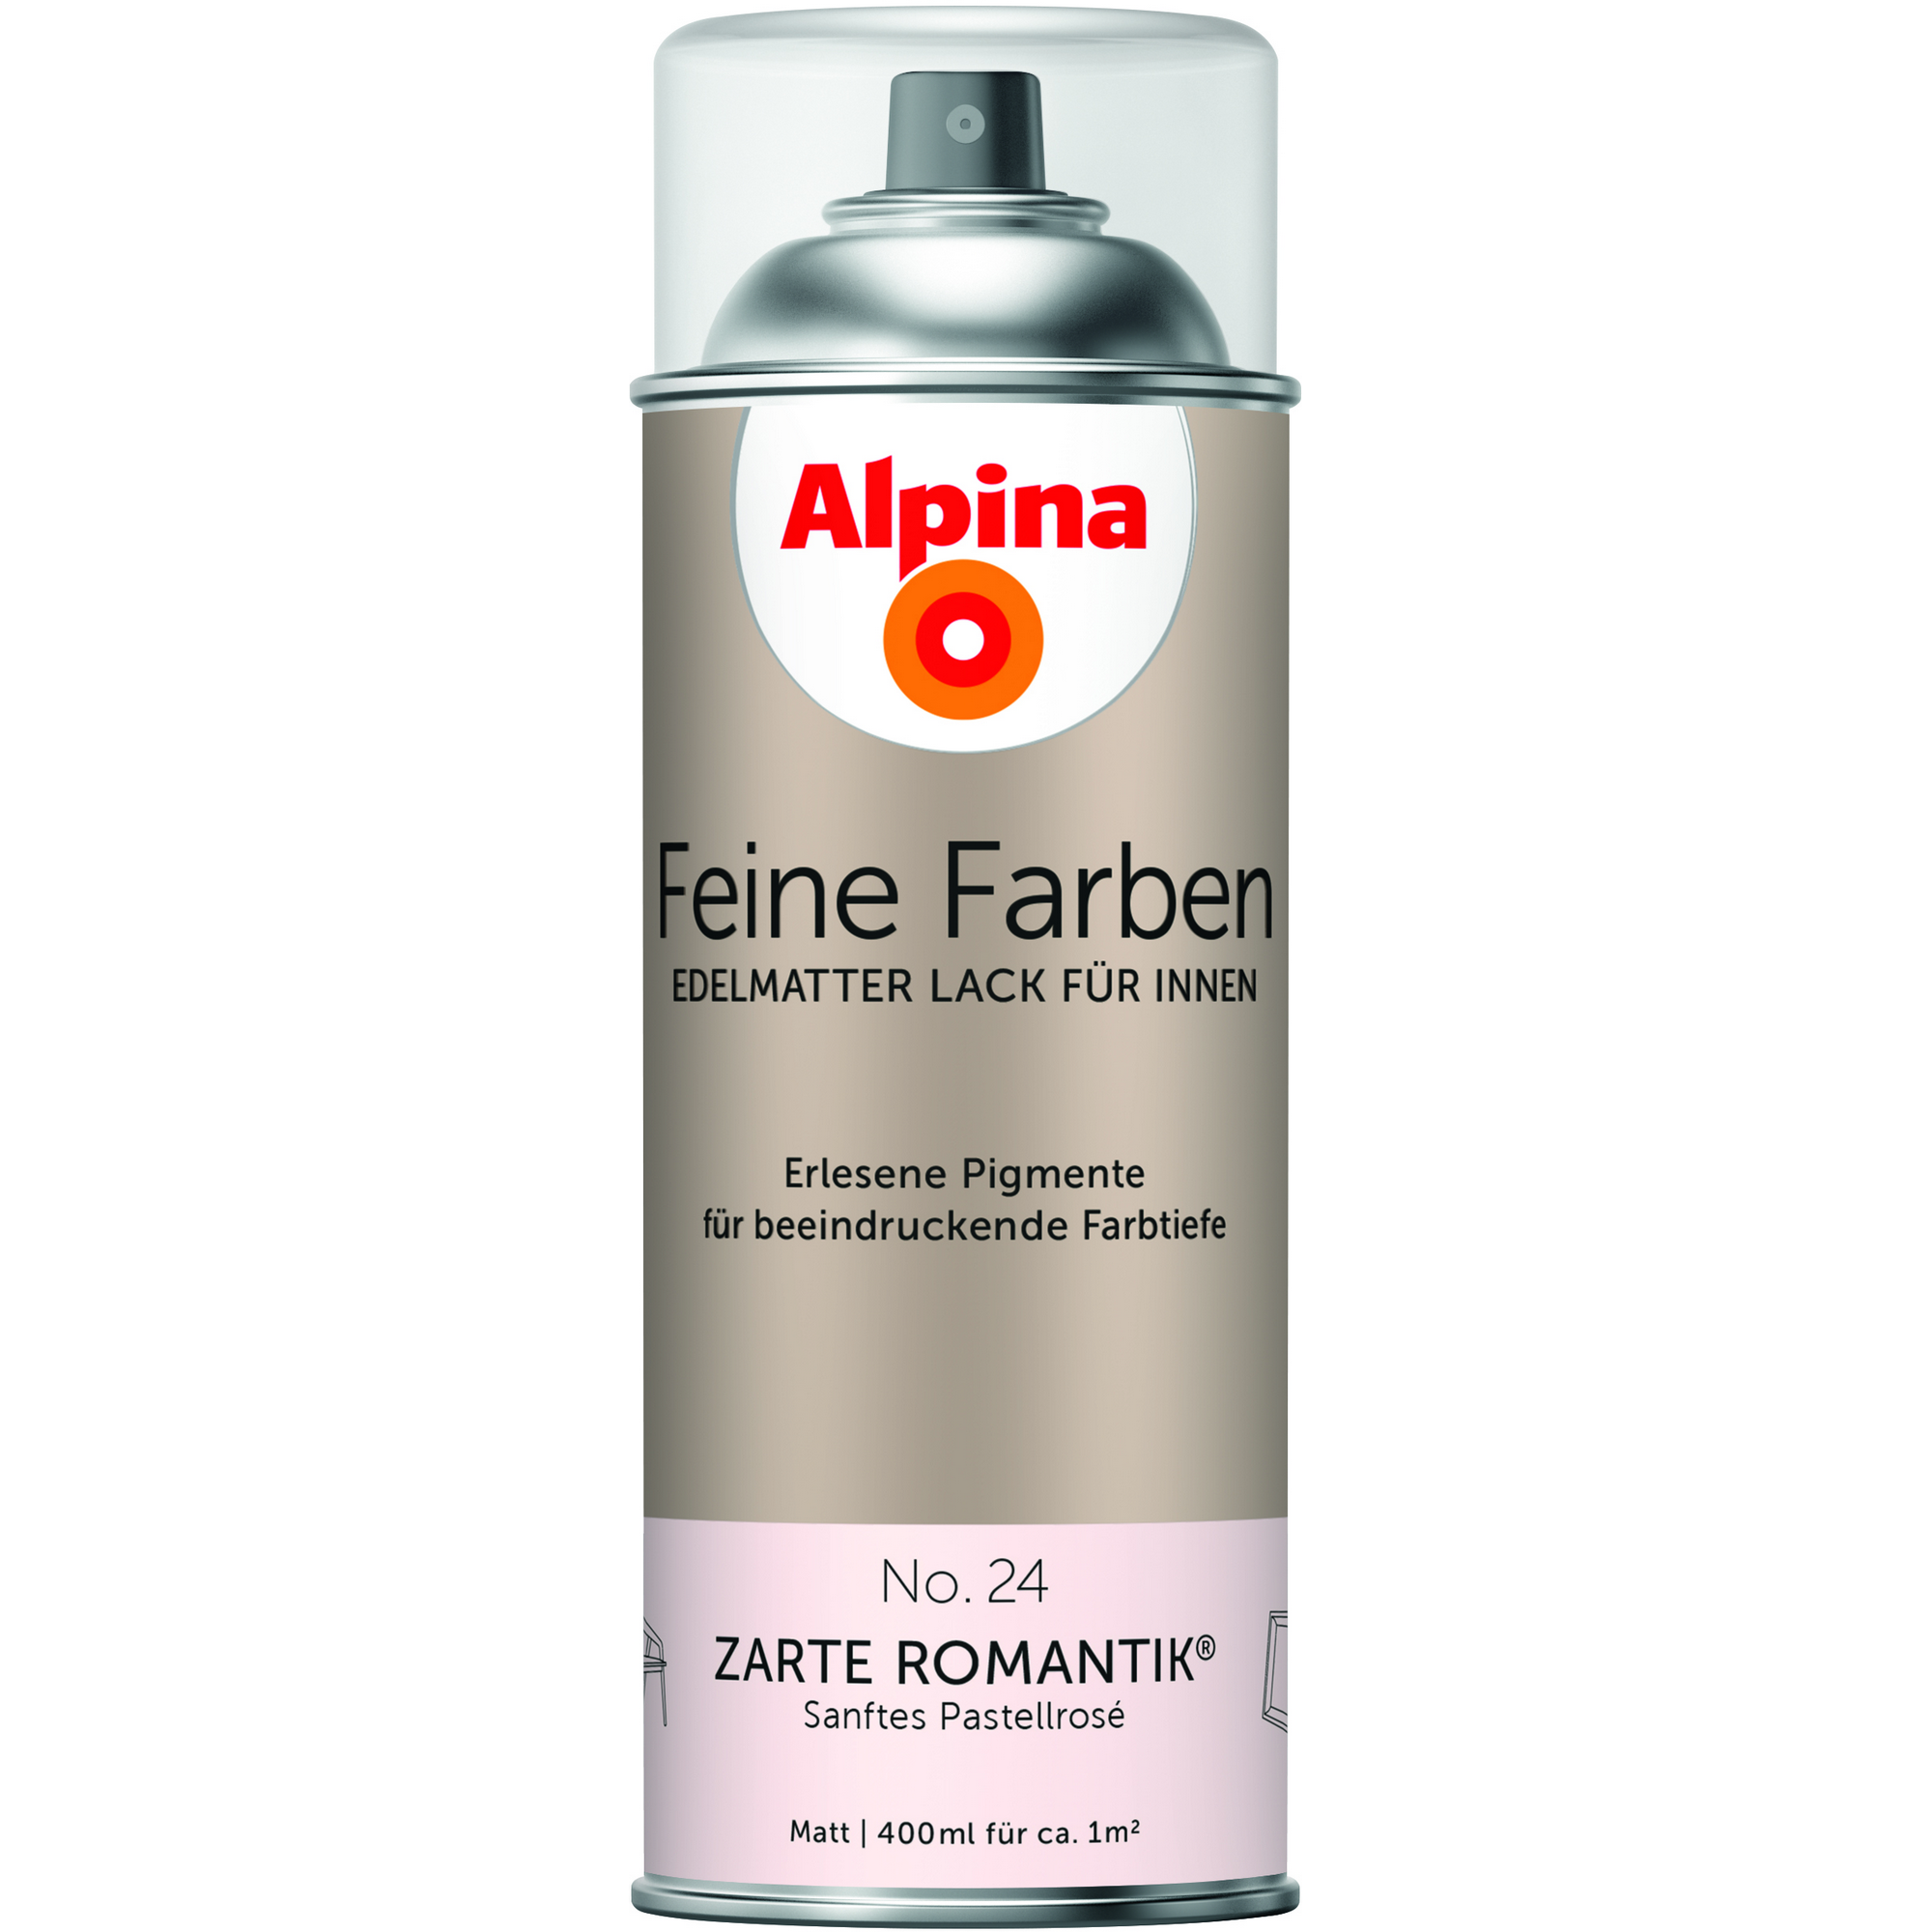 Feine Farben 'Zarte Romantik' pastellrosa matt 400 ml + product picture